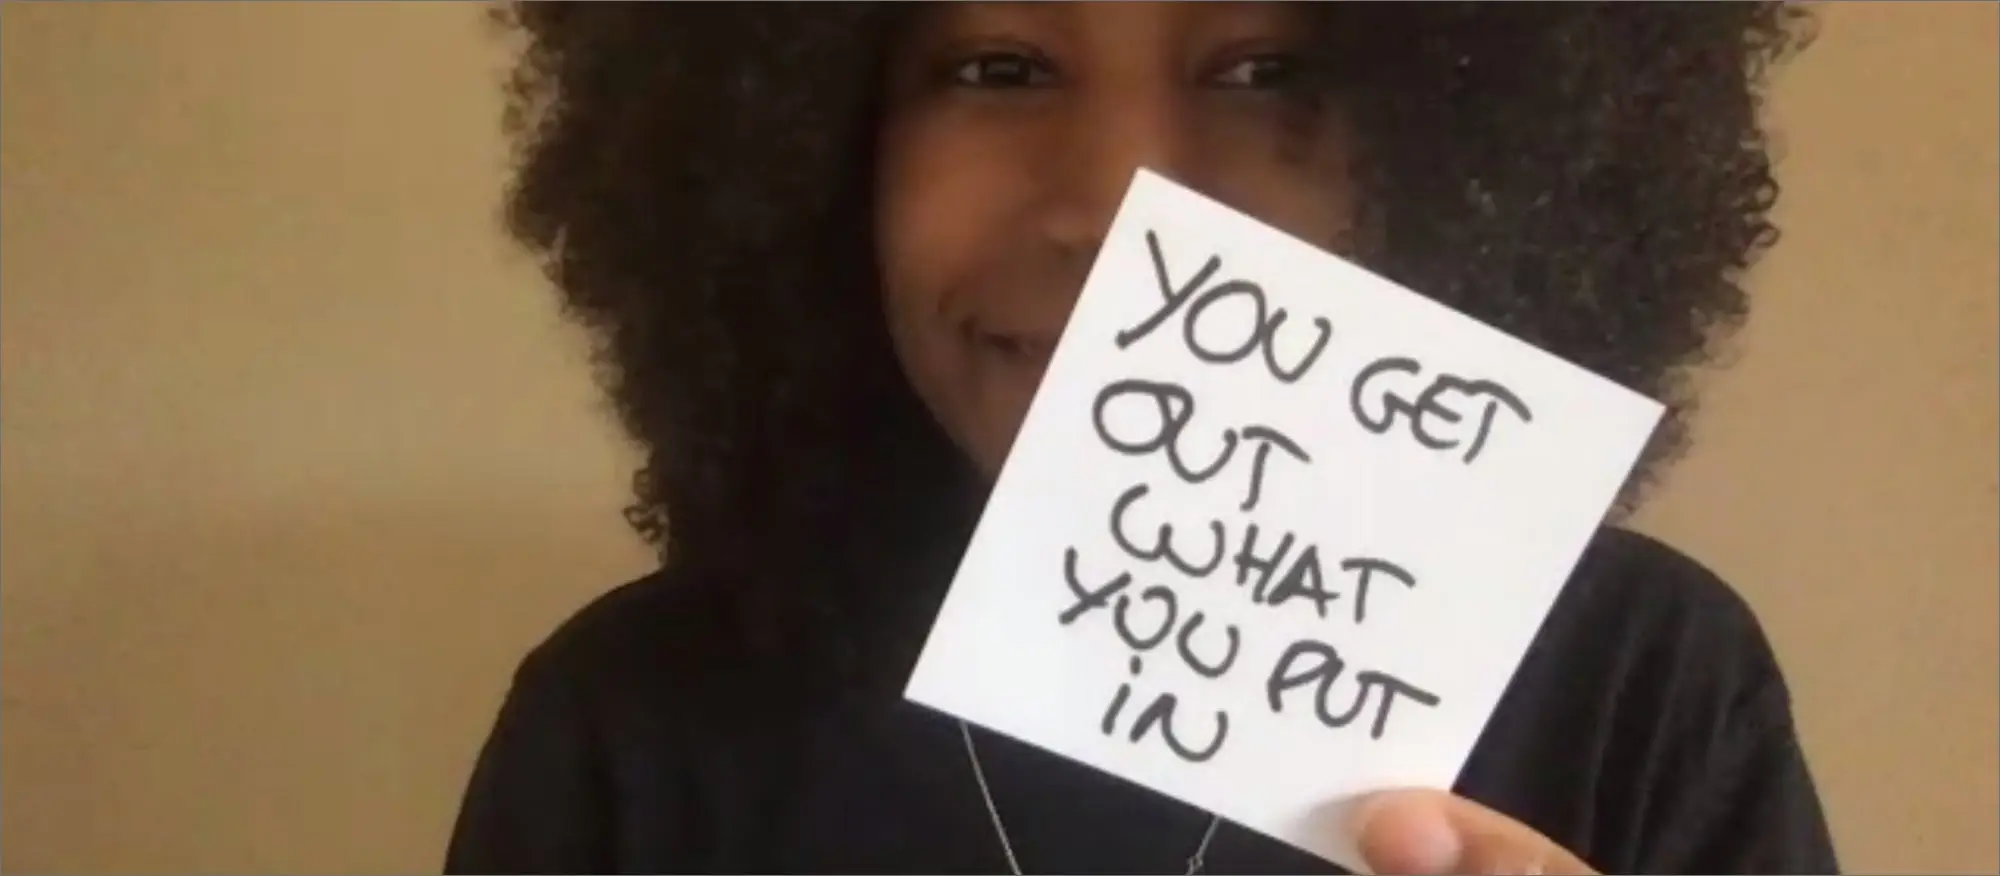 Ironhack student sharing inspirational message